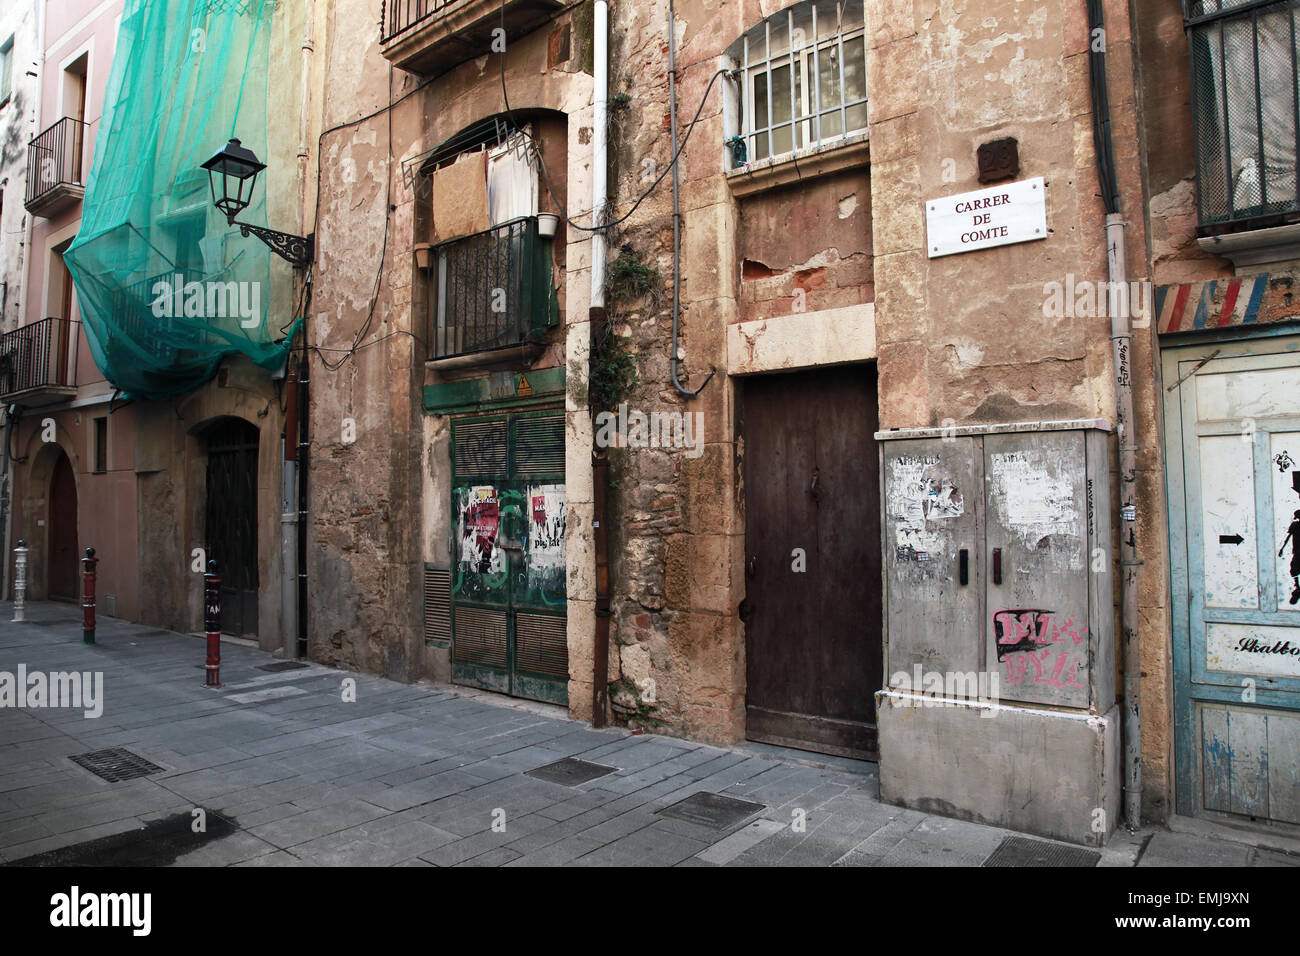 Tarragona, Spain - August 16, 2014: Old building facades on narrow street of Spanish Tarragona town Stock Photo